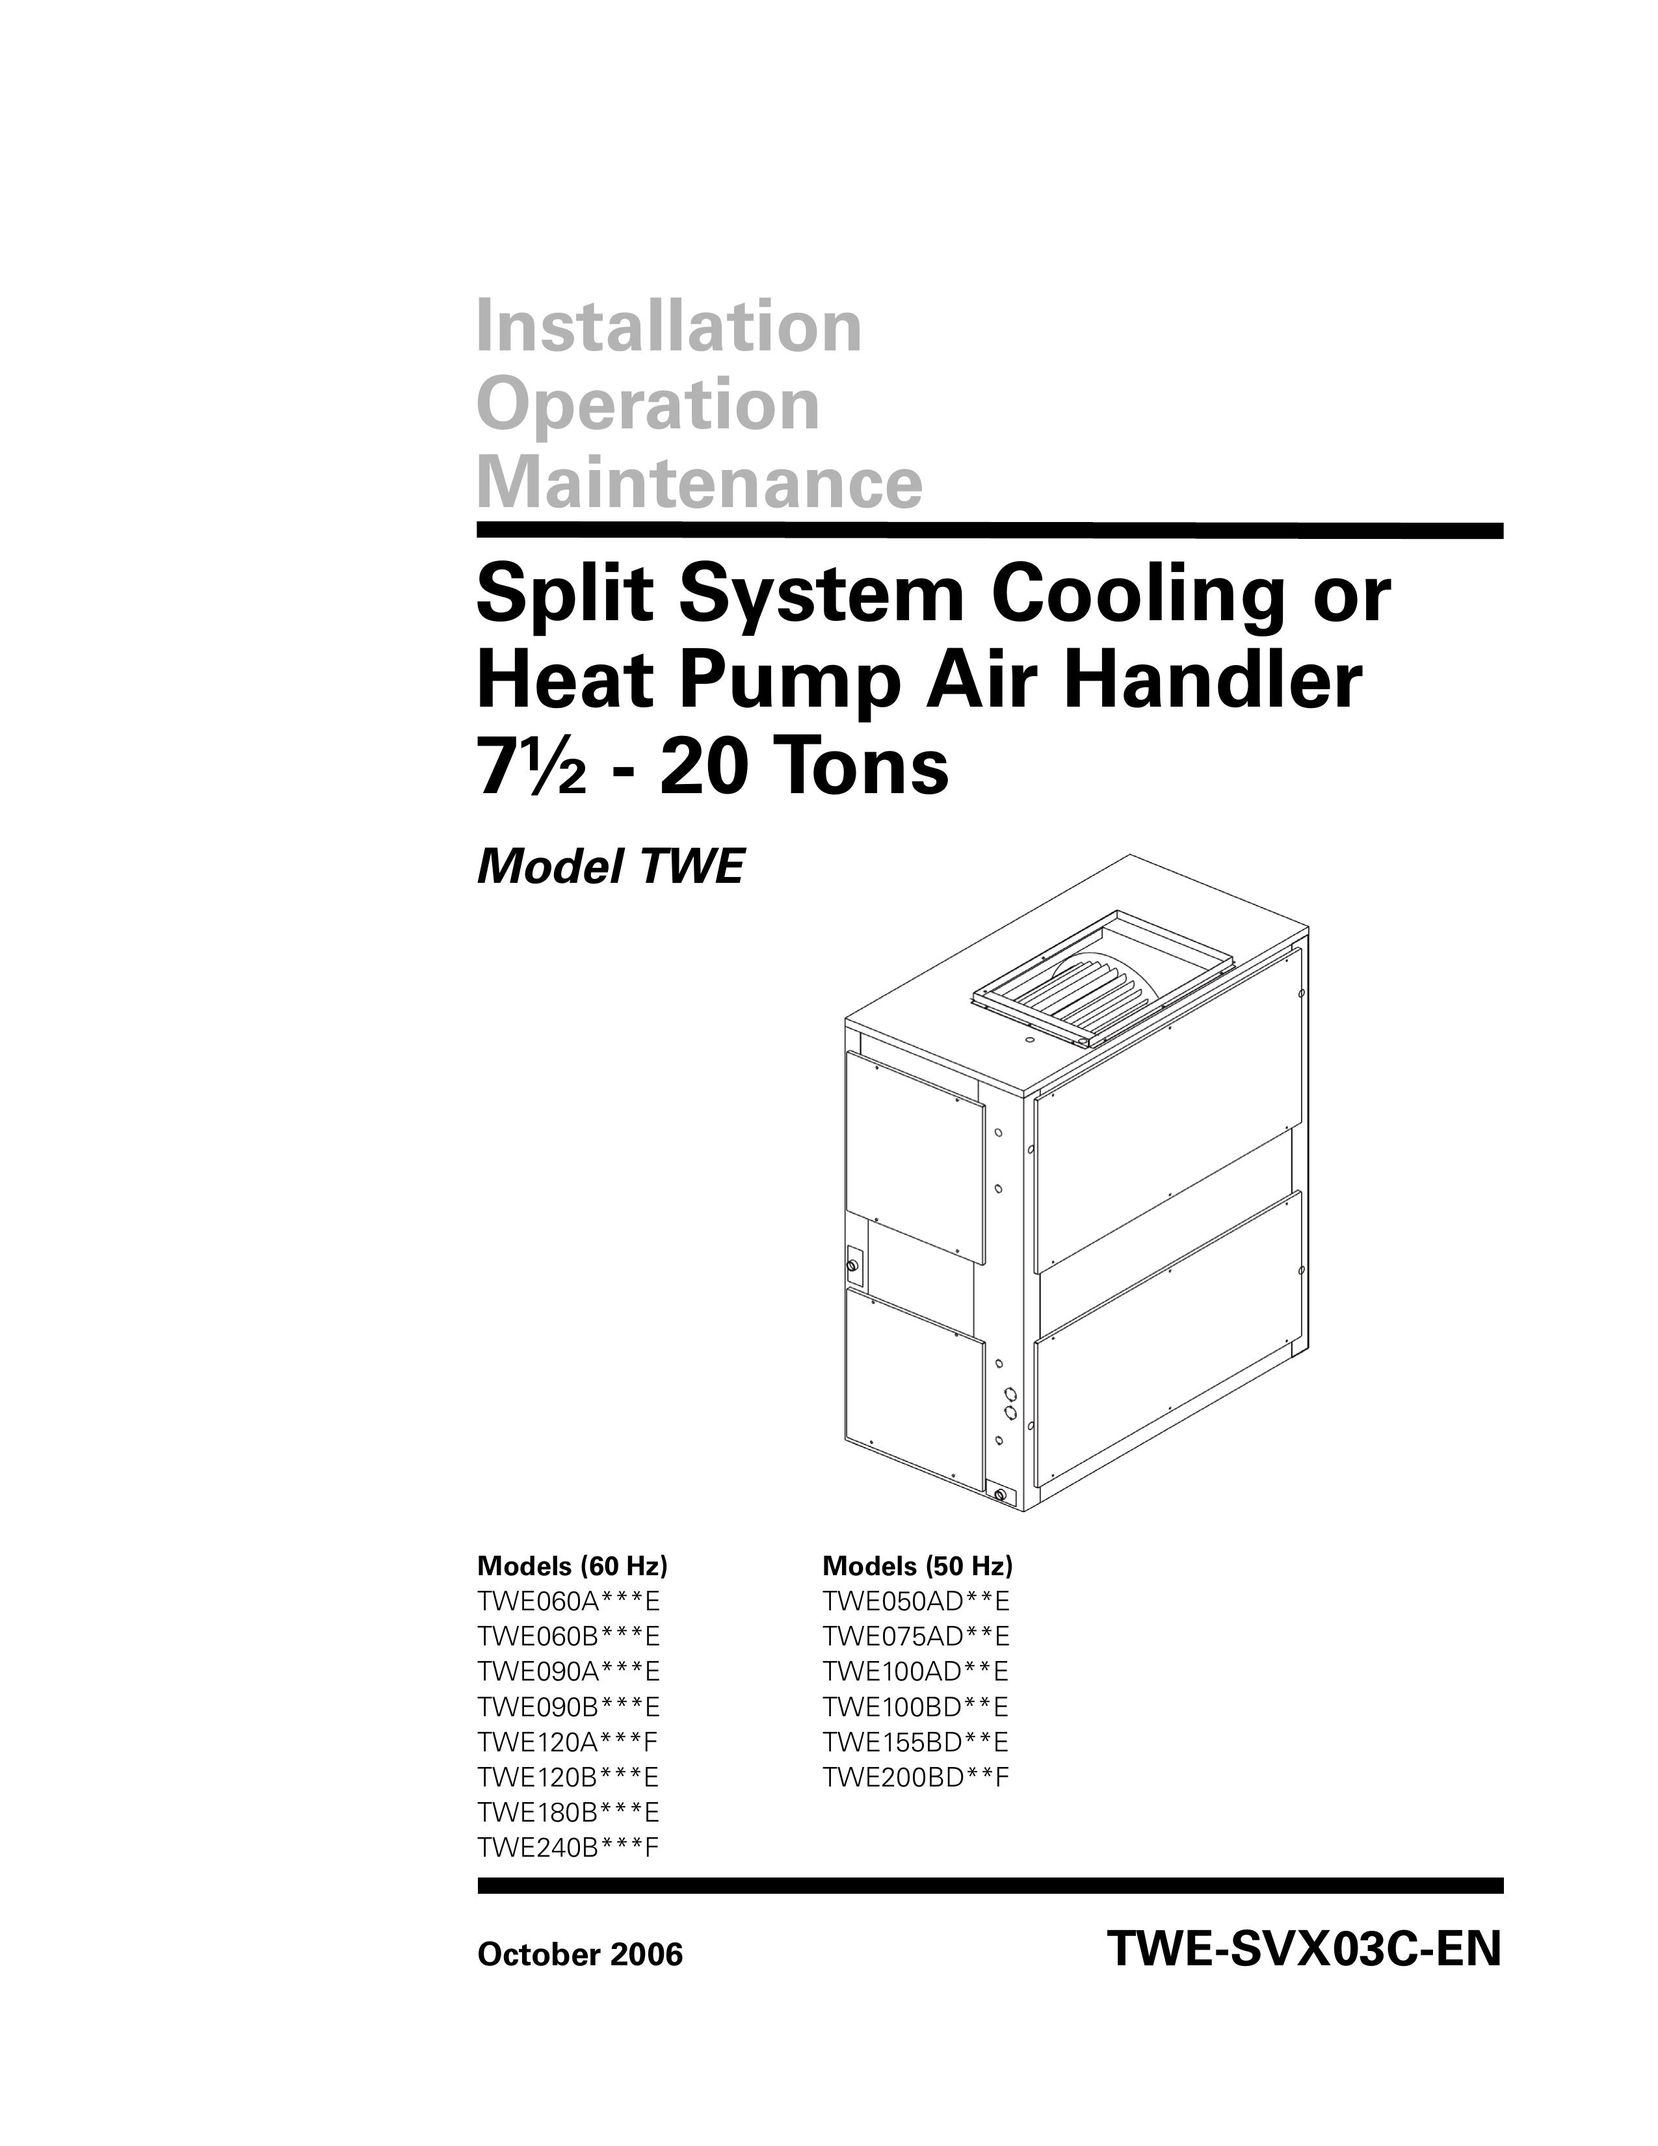 American Standard TWE100BD**E Heat Pump User Manual